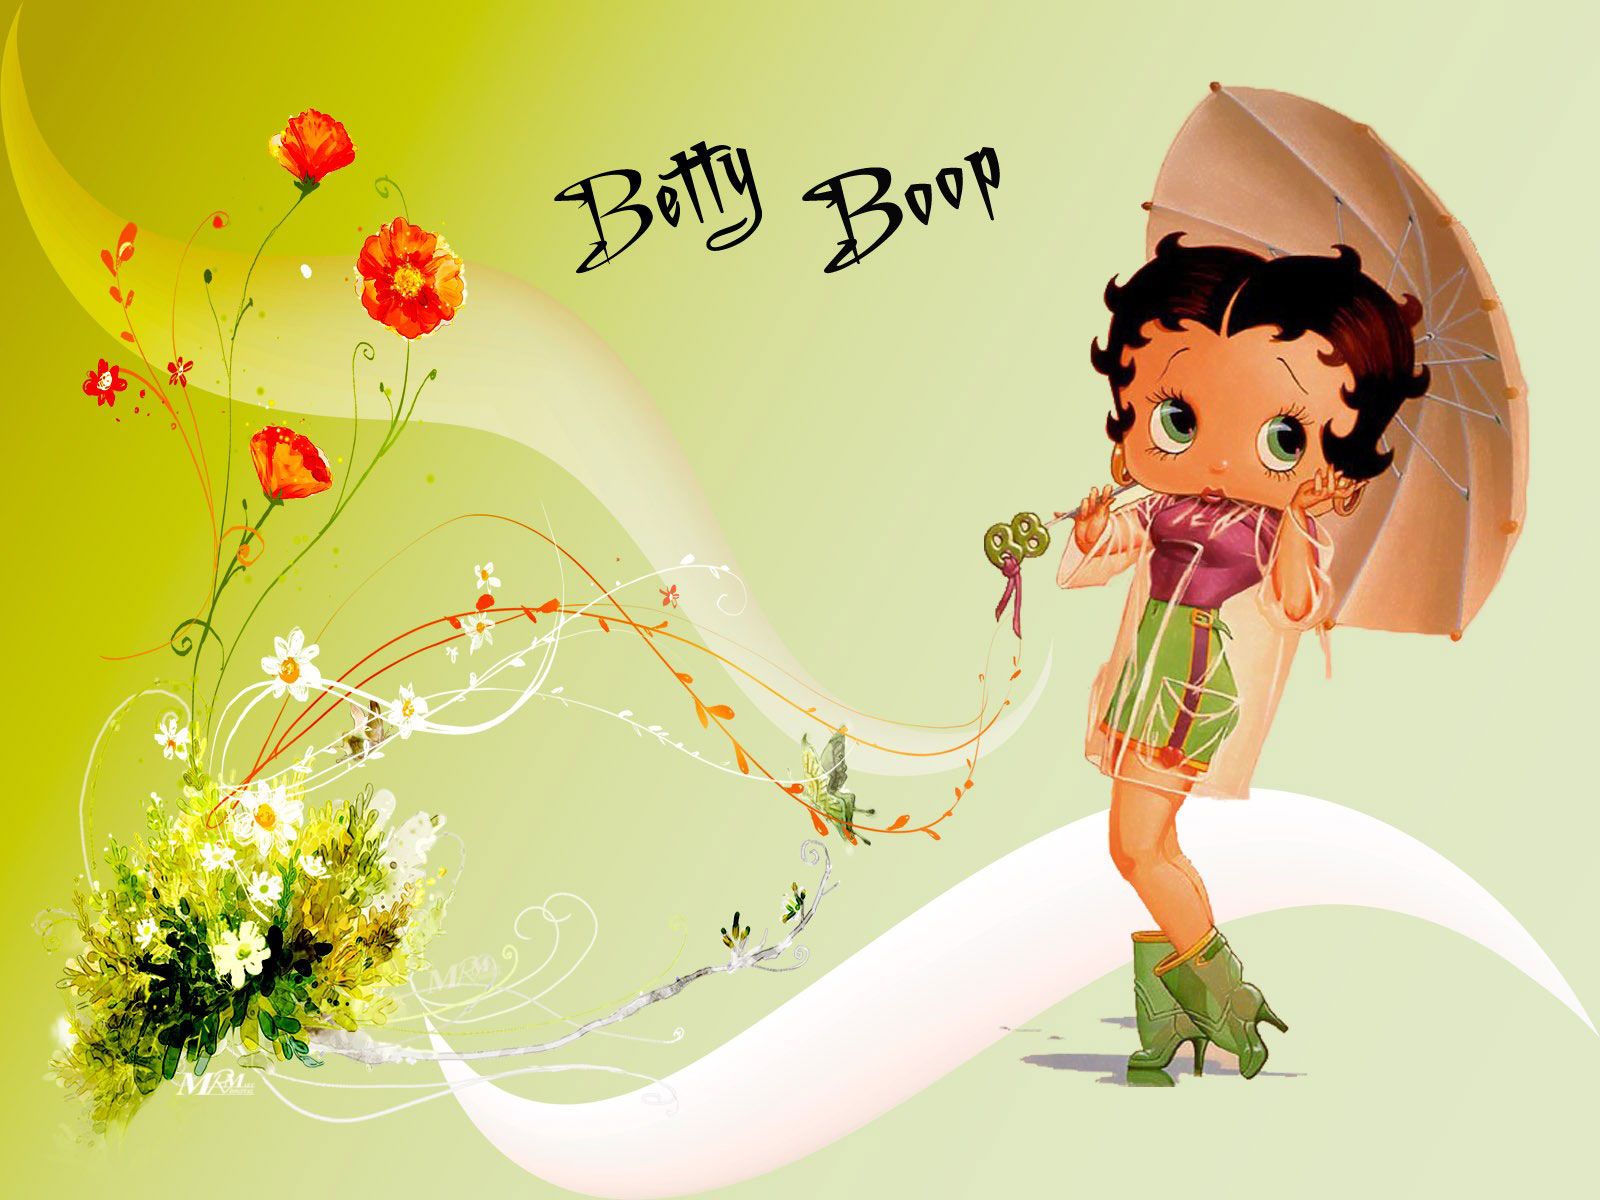 Betty Boop Background. Betty Boop